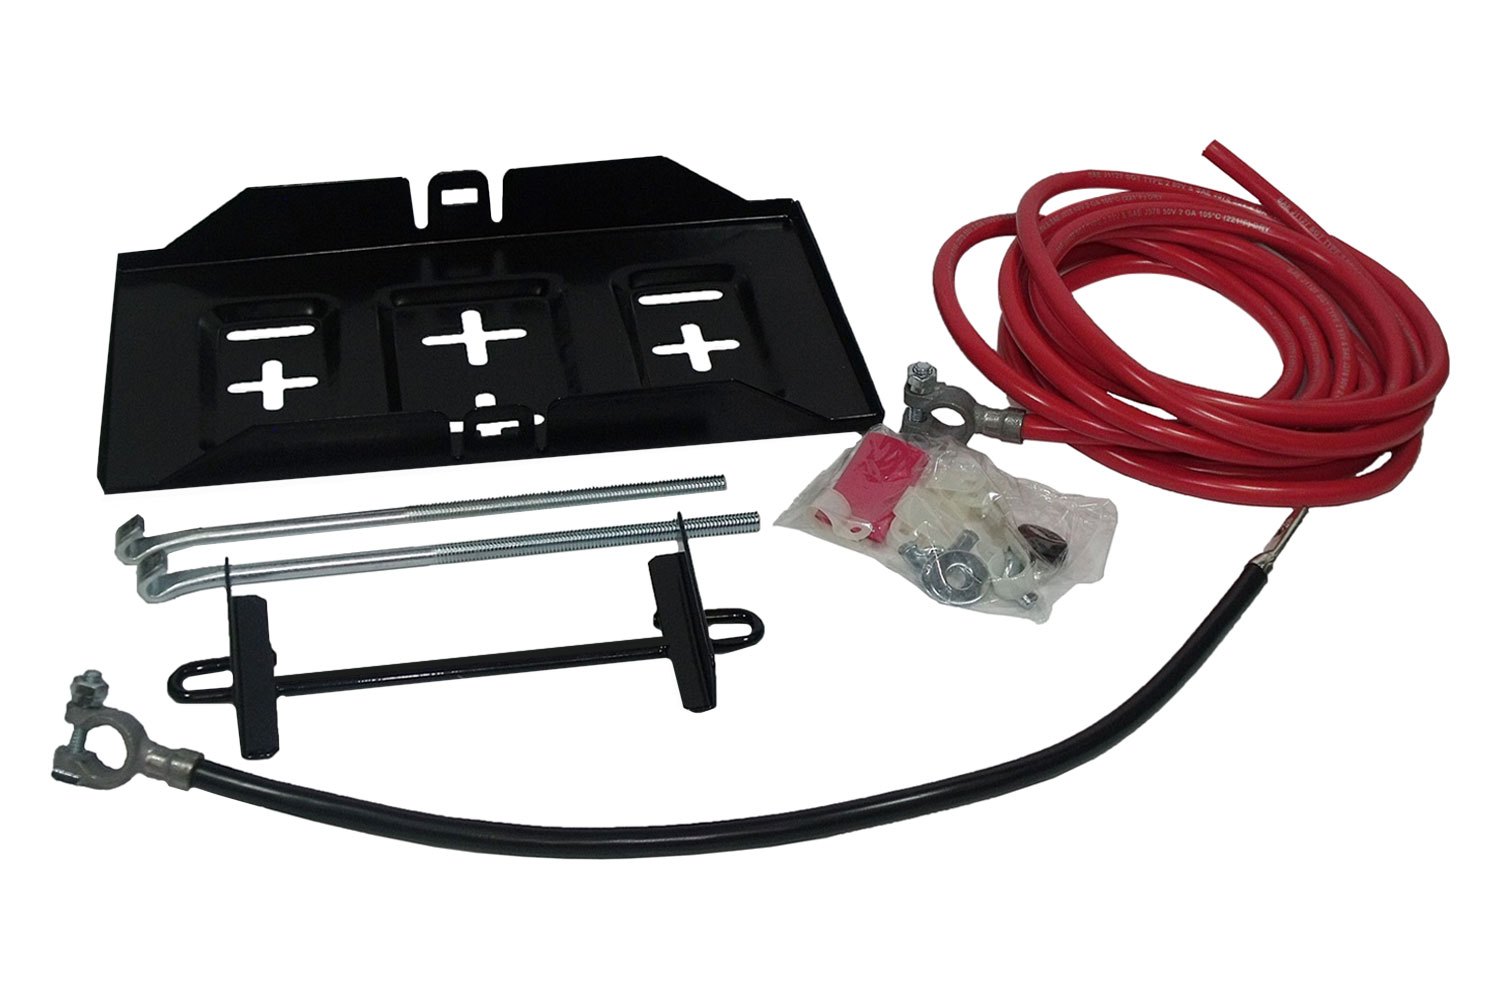 Аксессуары для аккумуляторов. Mustang Battery Relocation Kit. Релокатор для антенны. Mustang Battery Relocation Kit 2015-current. Must Relocator Kit.